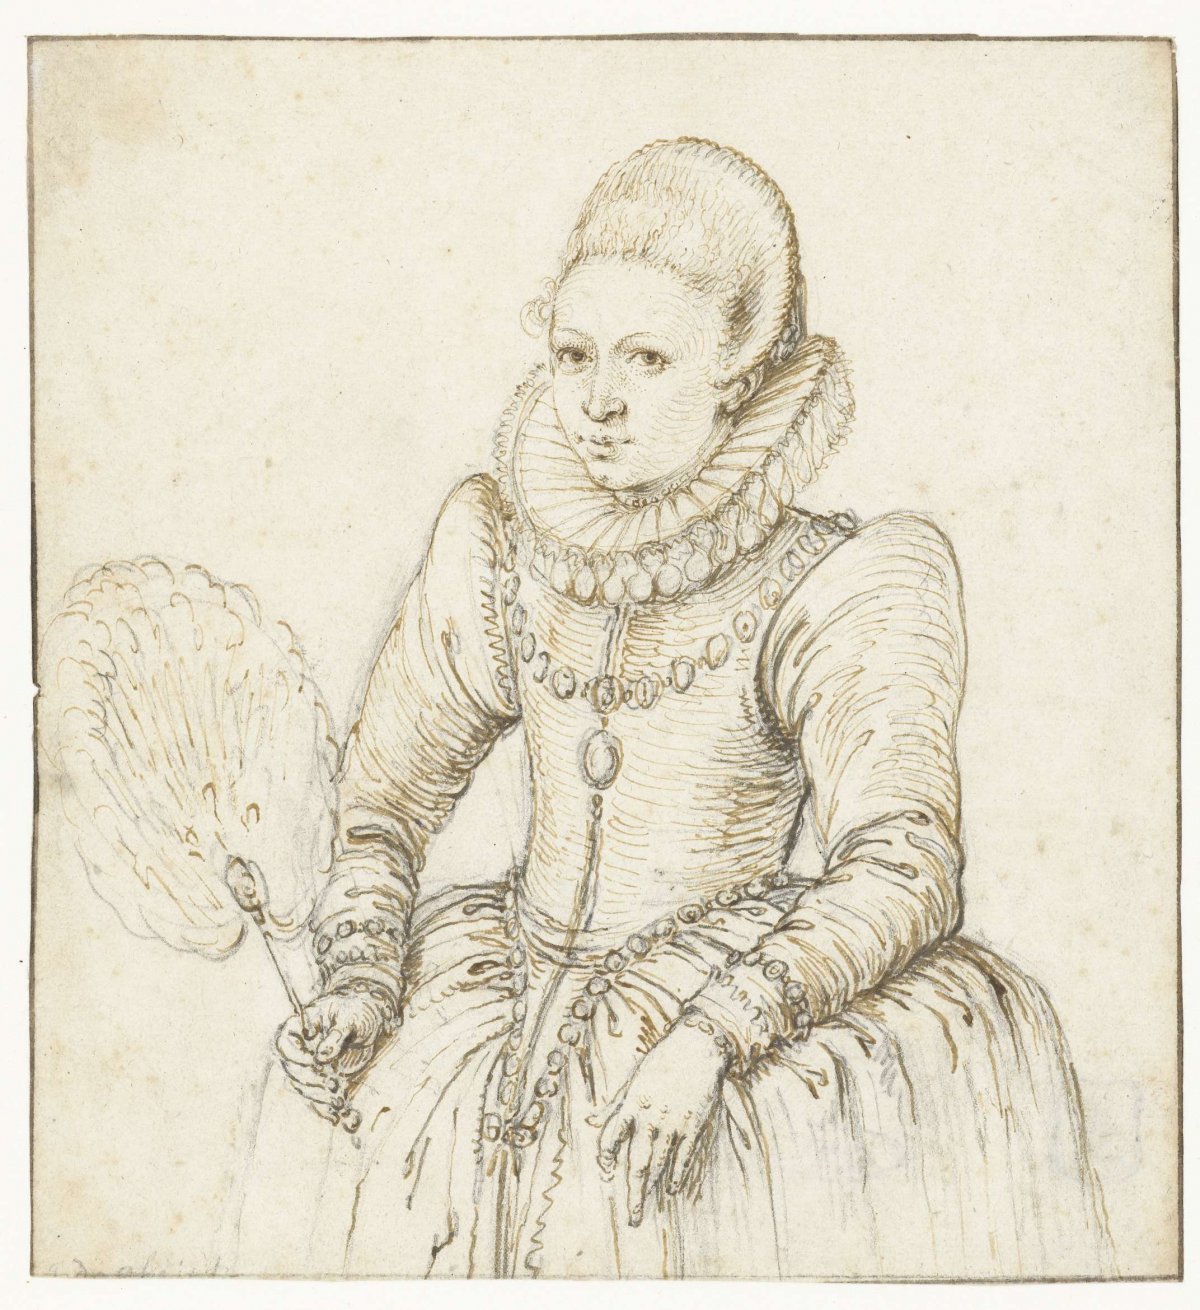 Portrait of a distinguished woman, Jacques de Gheyn (II), 1575 - 1625